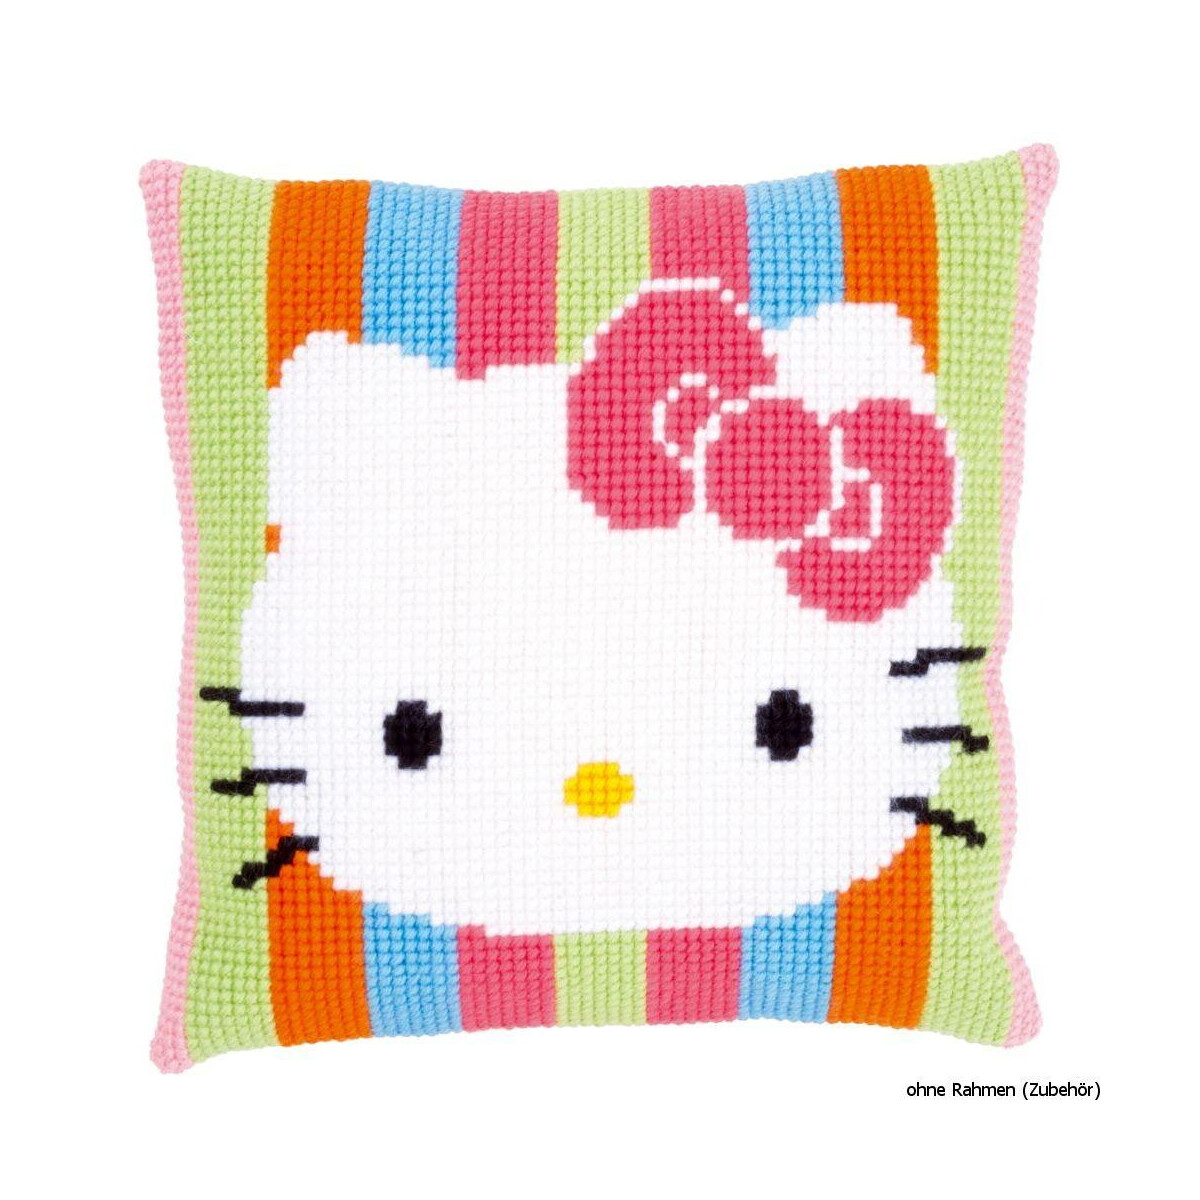 Vervaco Подушка для вышивания крестом "Hello Kitty...